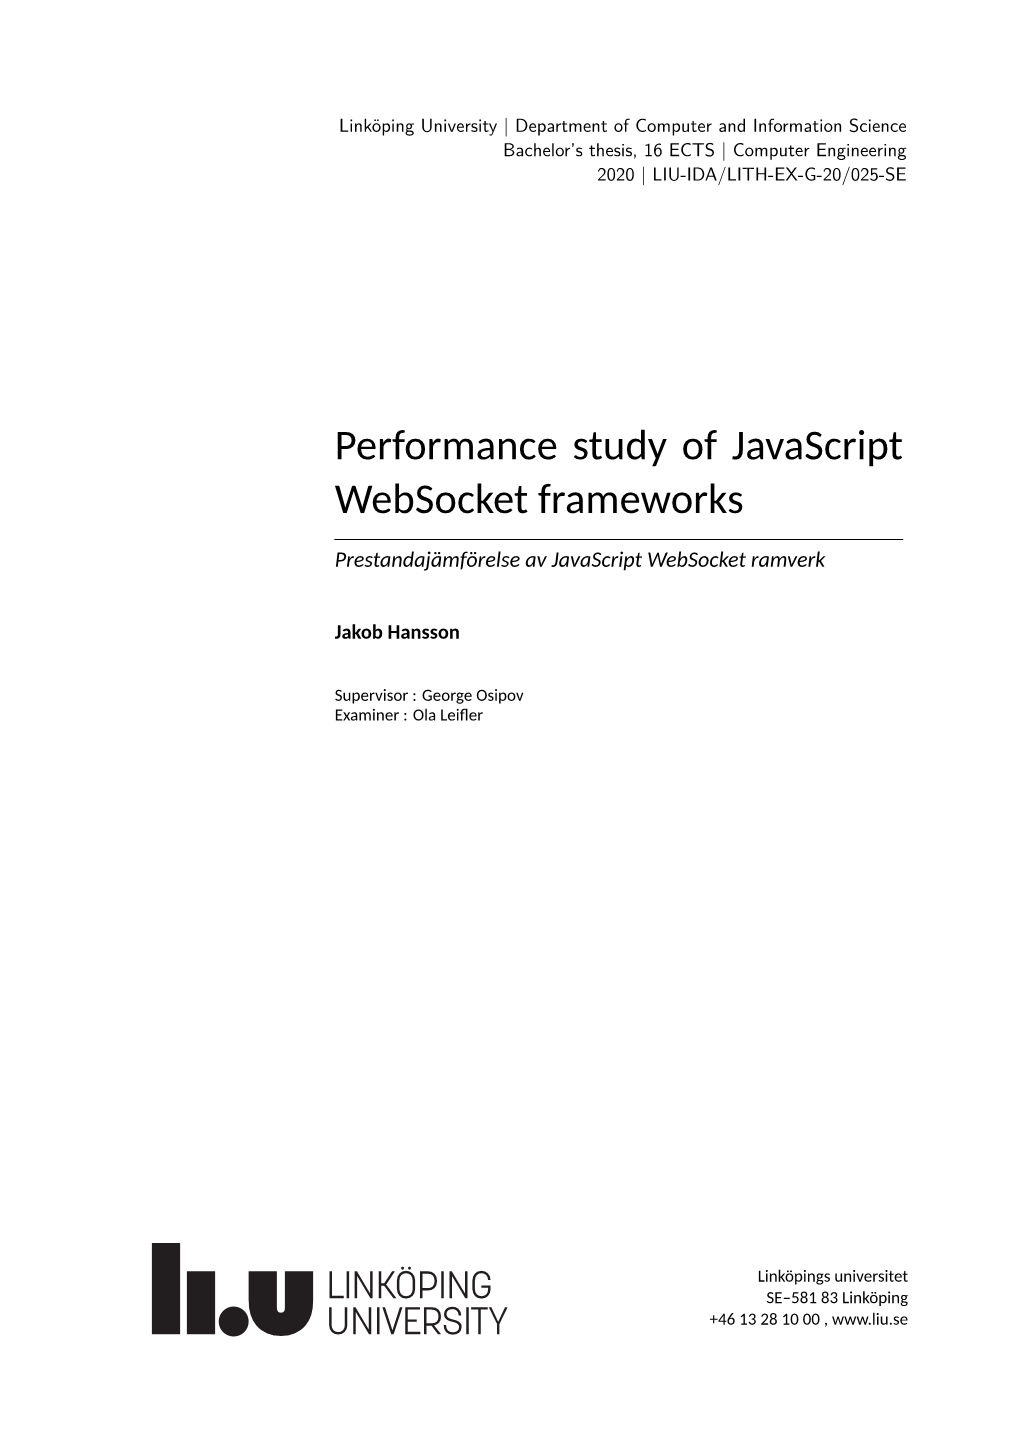 Performance Study of Javascript Websocket Frameworks